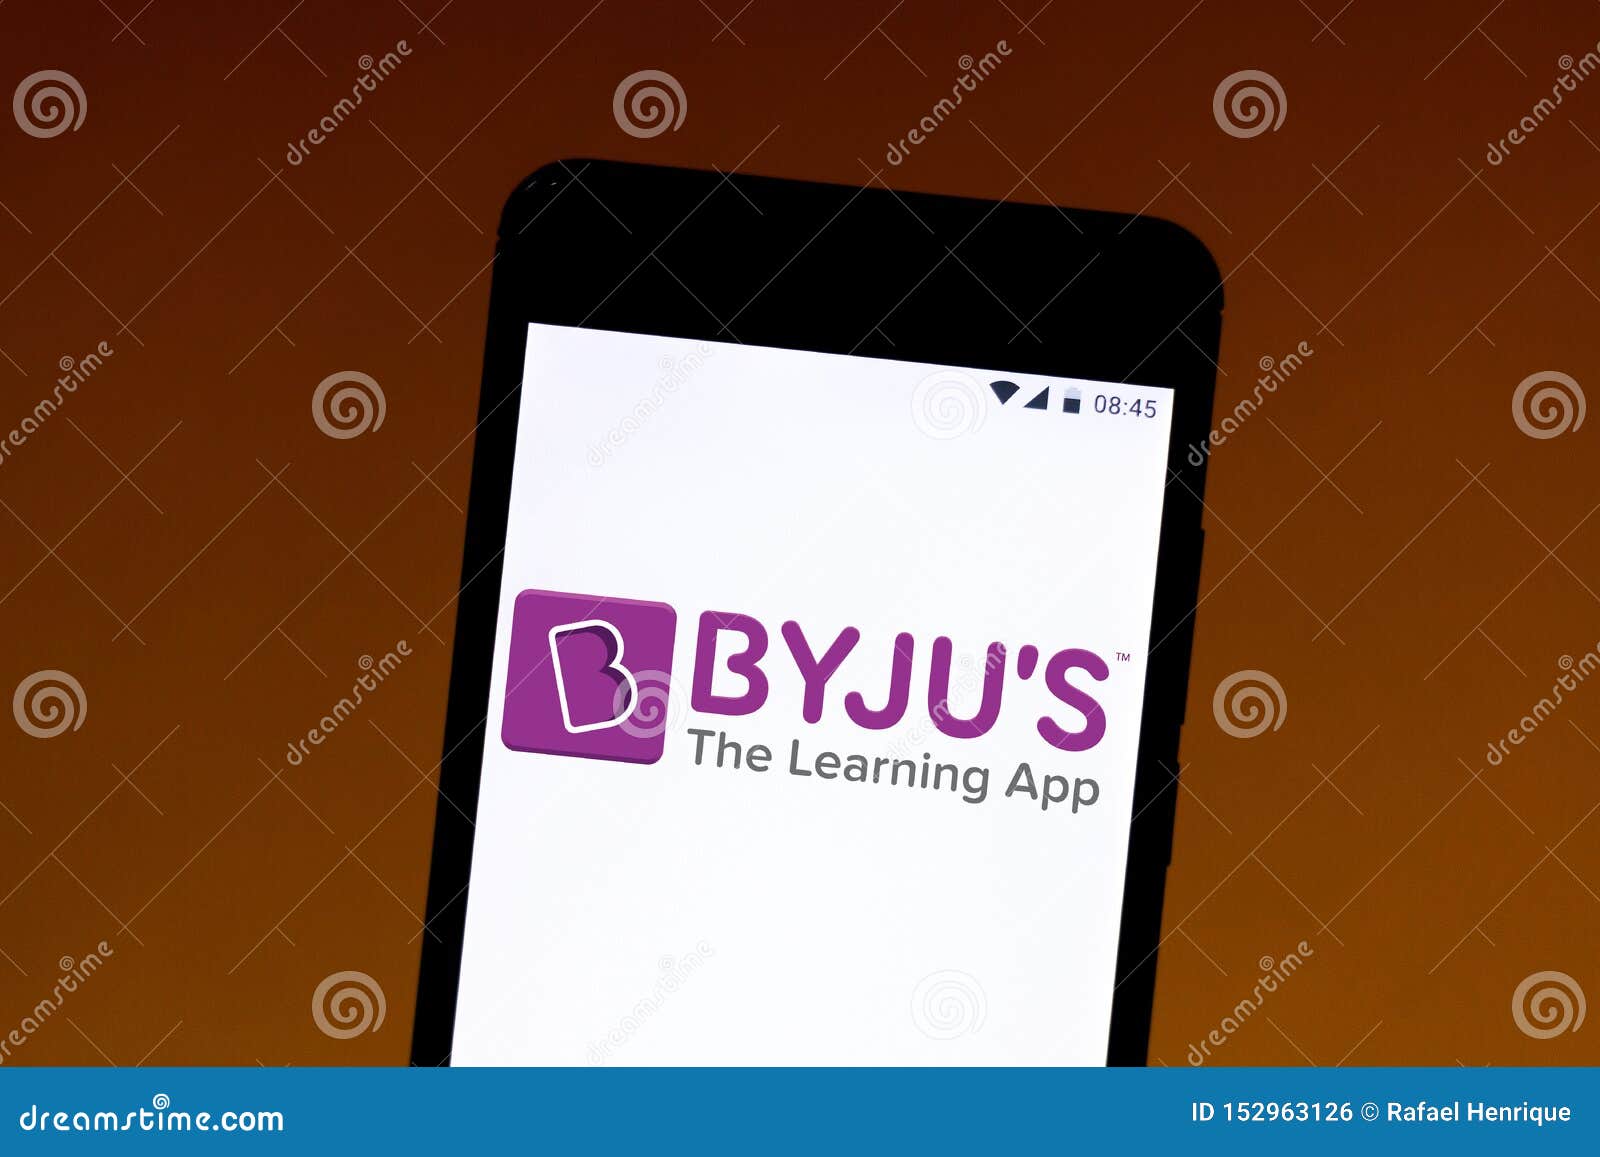 july brazil photo illustration byjus learning app logo displayed smartphone 152963126